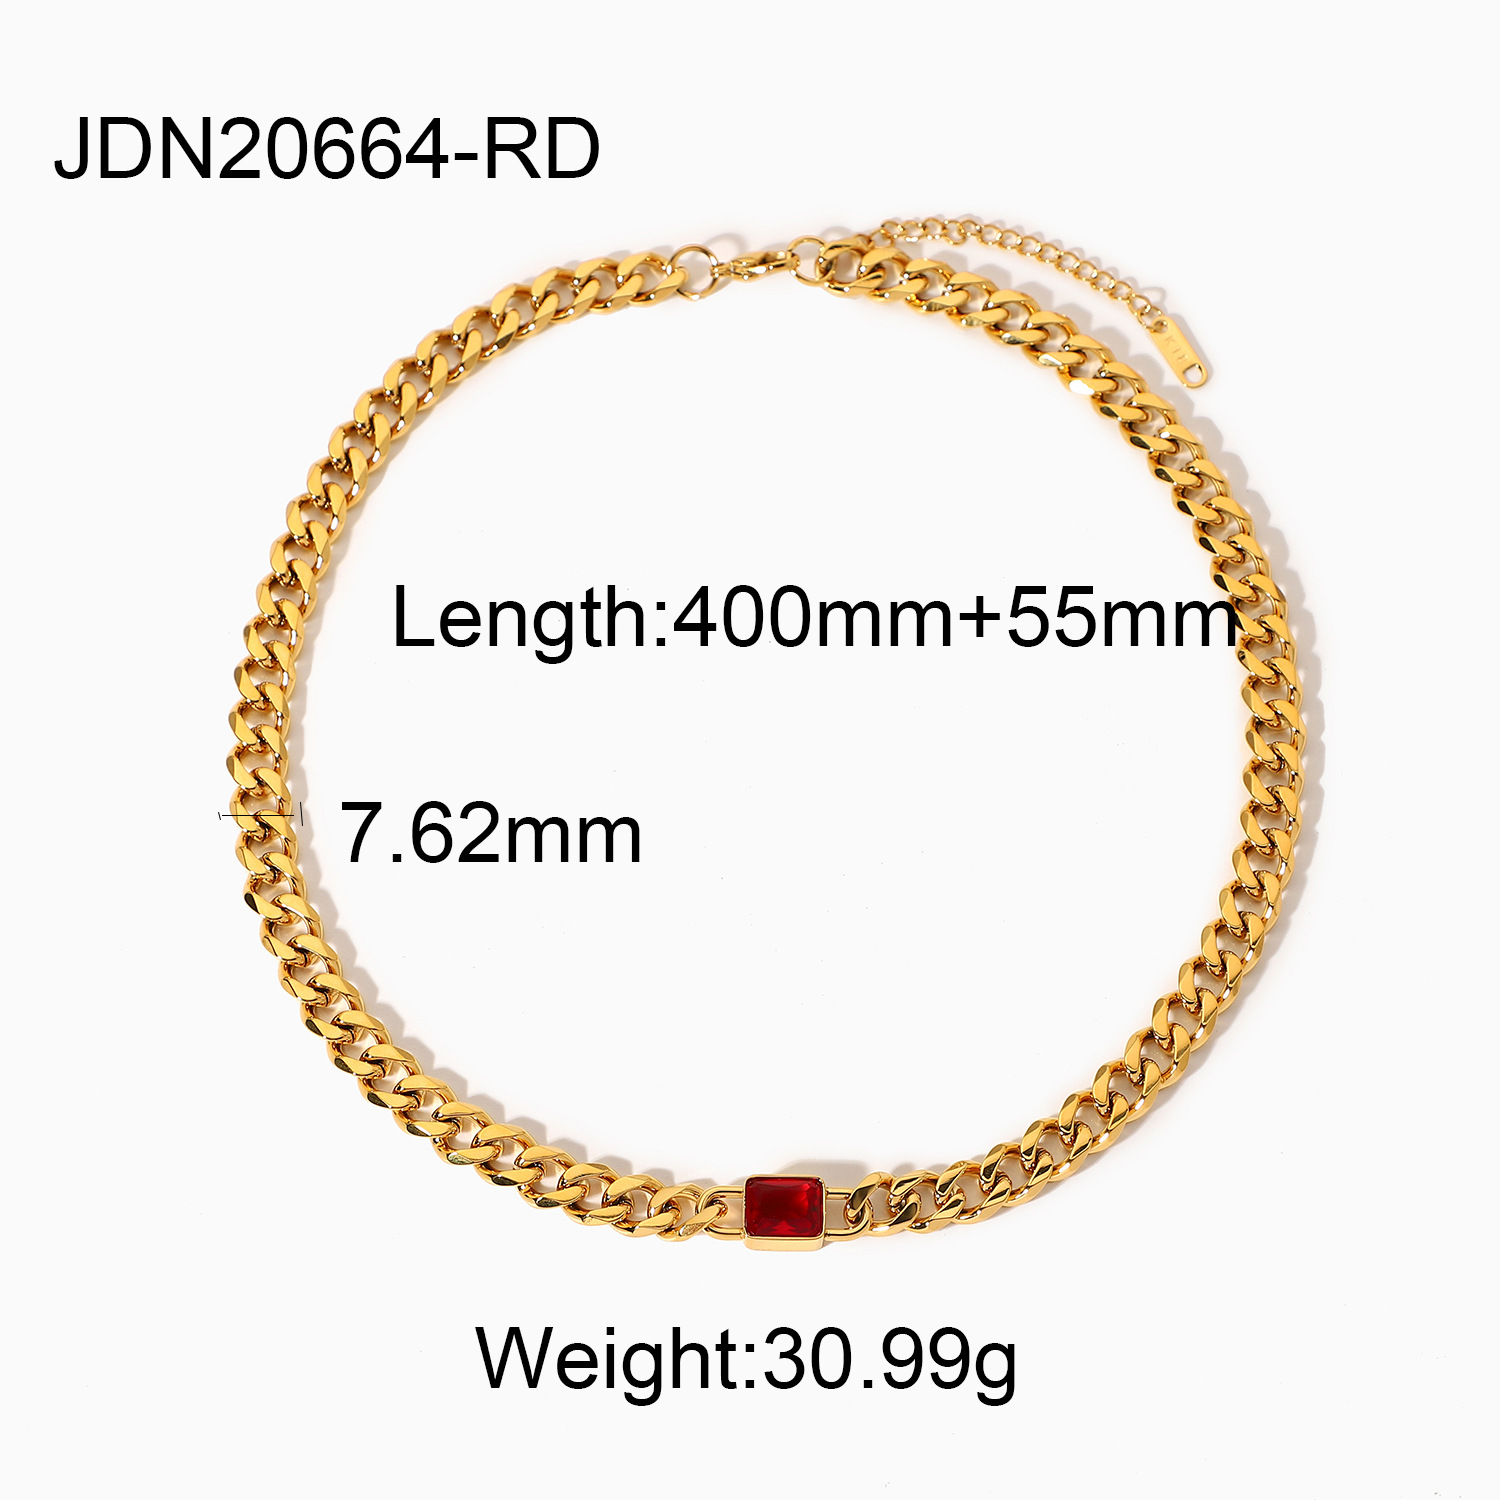 JDN20664-RD